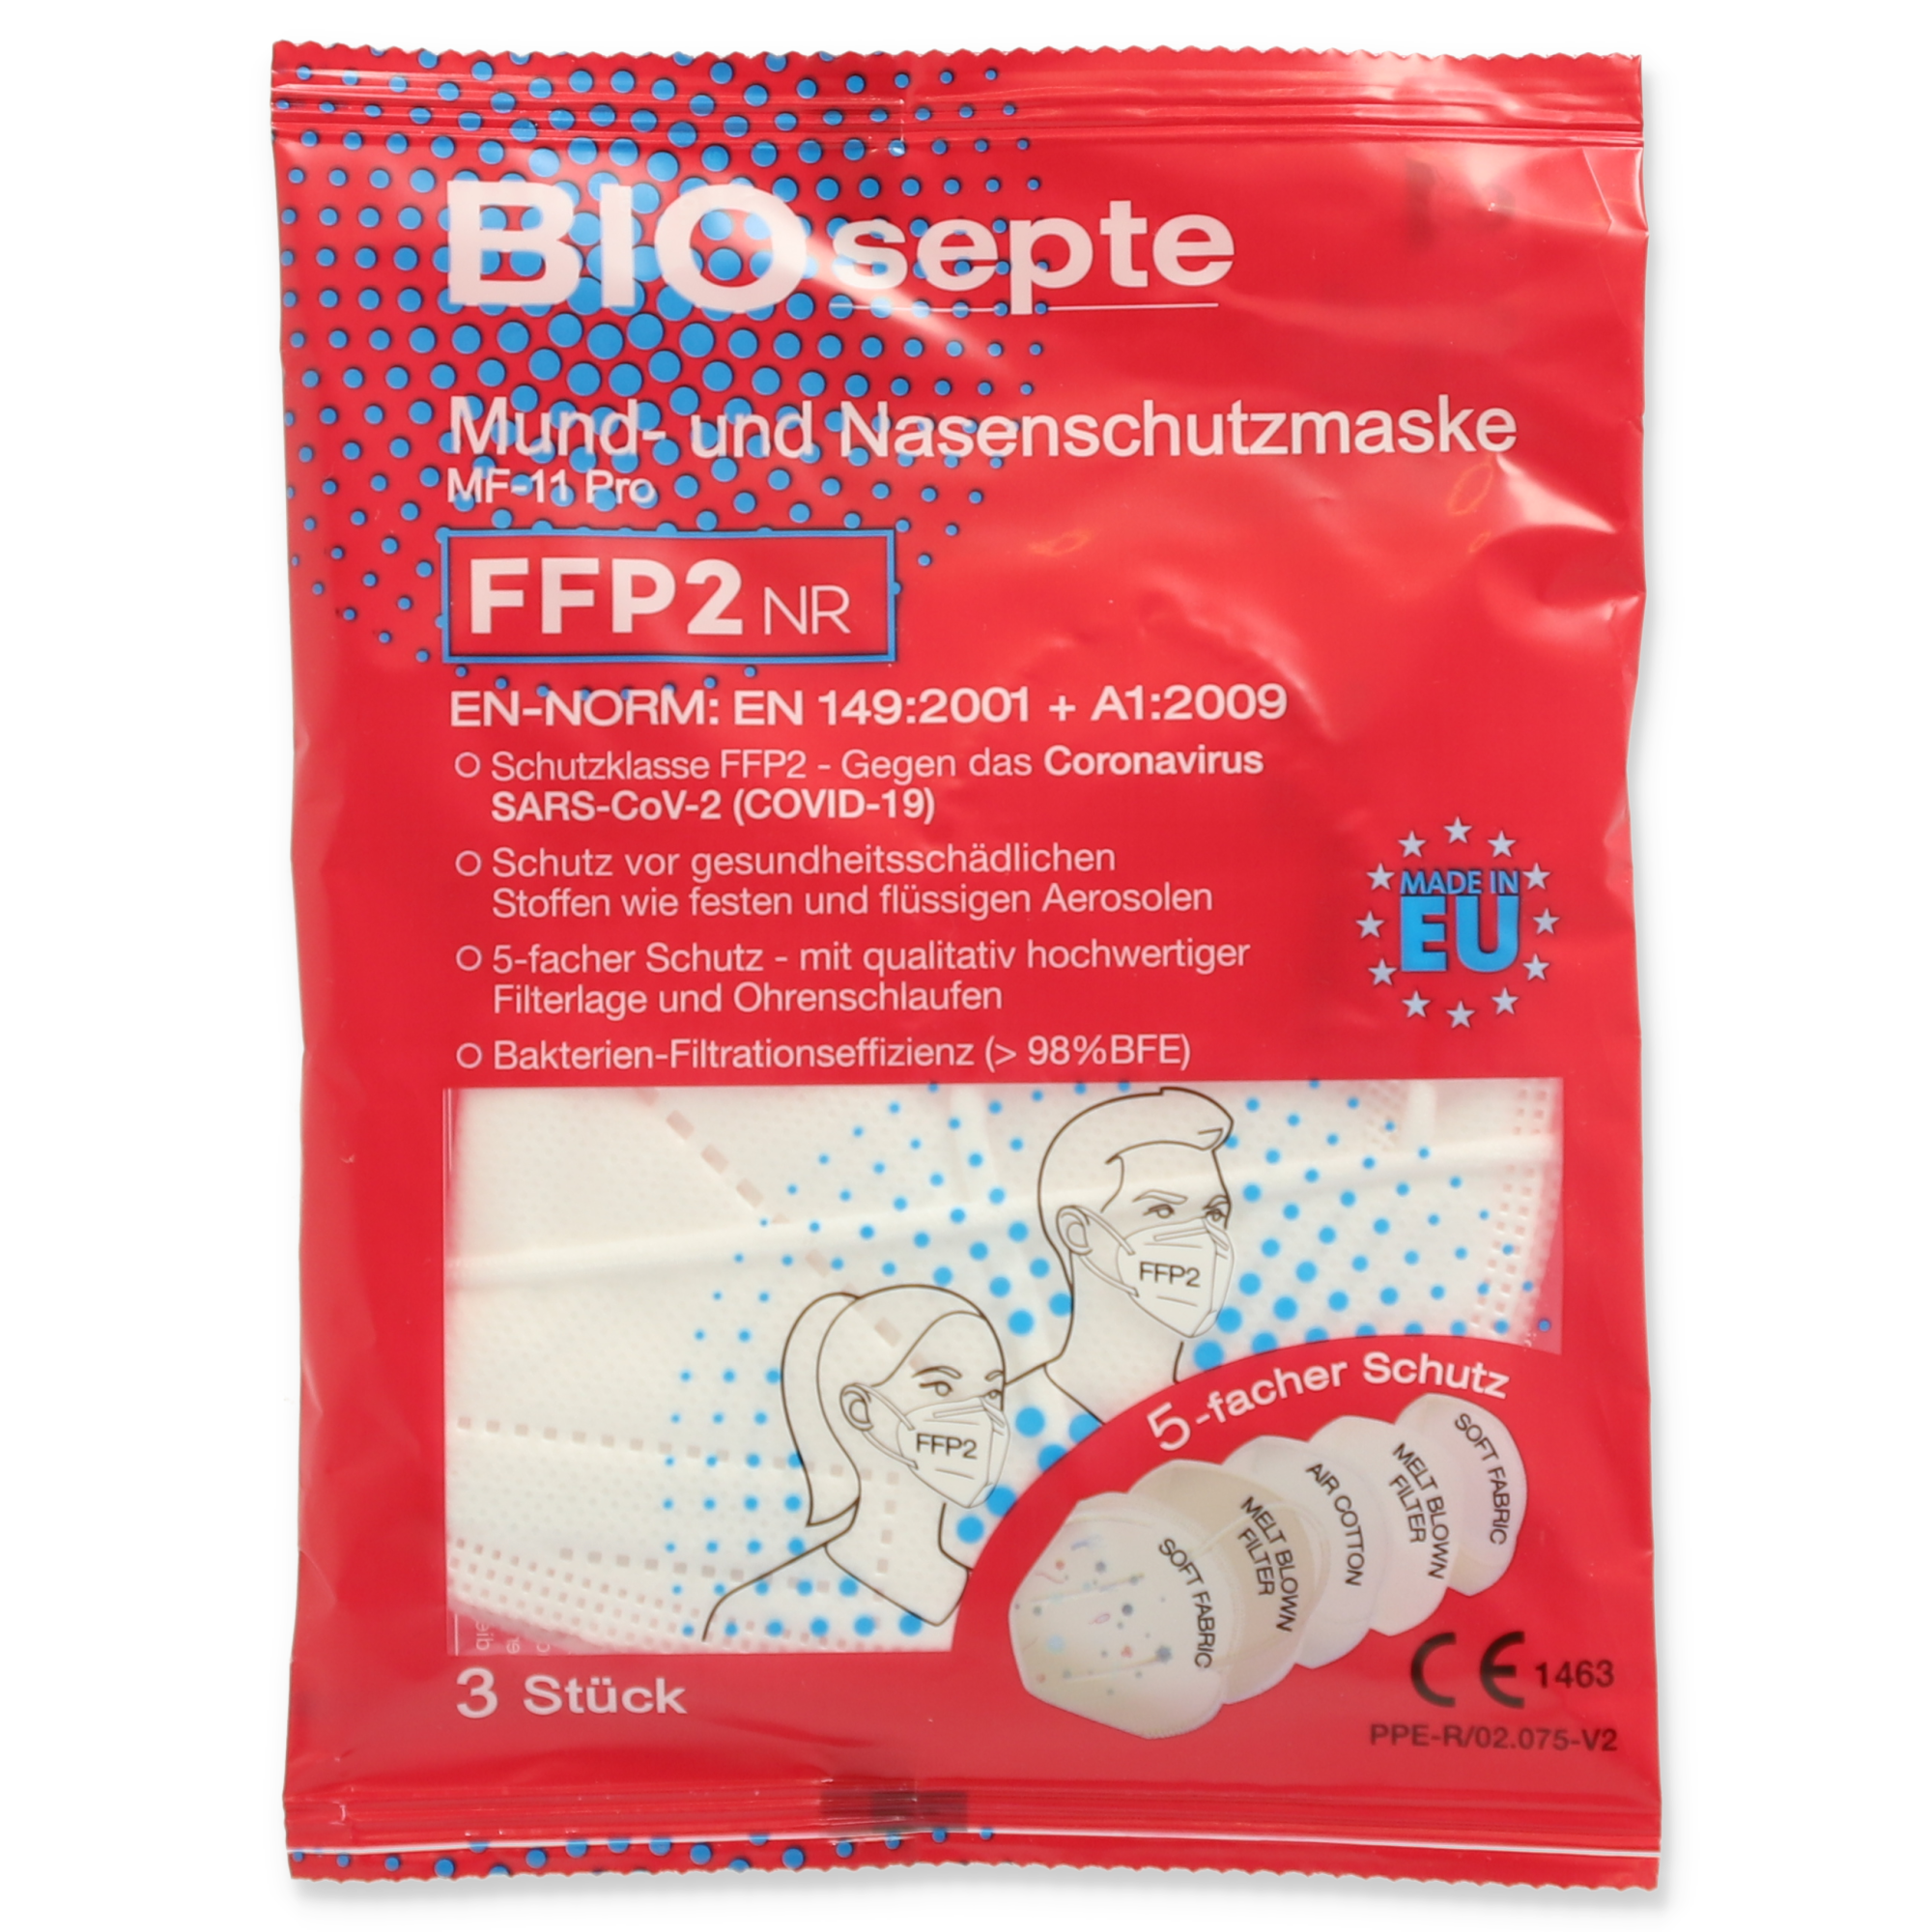 FFP2-Atemschutzmaske, 3 Stück + product picture